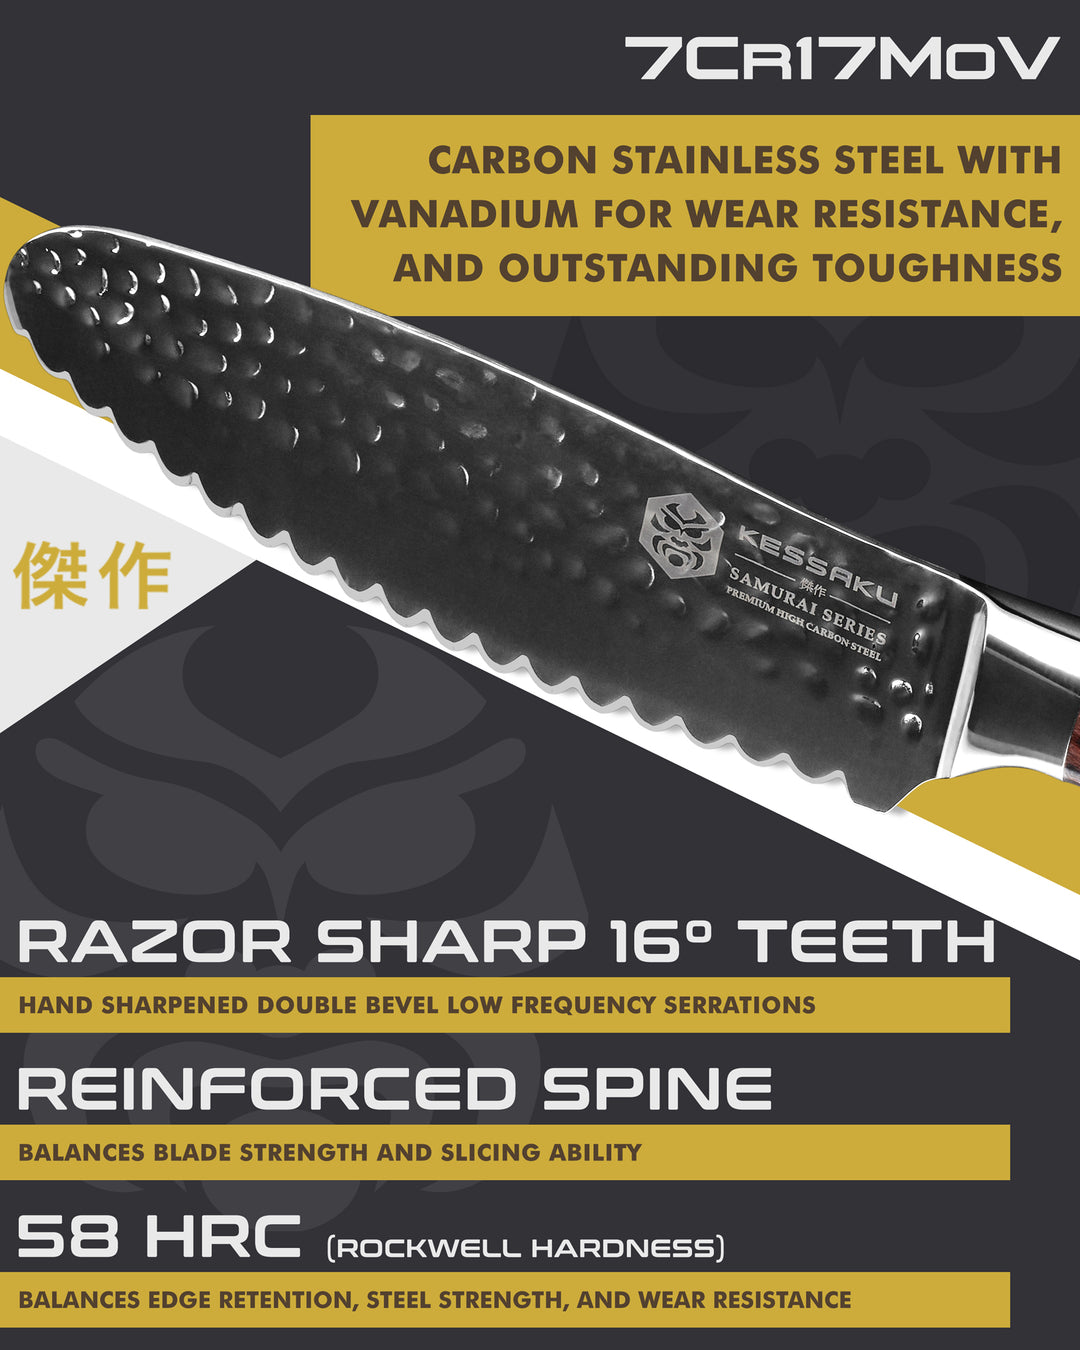 Kessaku Samurai Sandwich Knife blade features: 7Cr17MoV steel, 58 HRC, 16 degree edge, reinforced spine